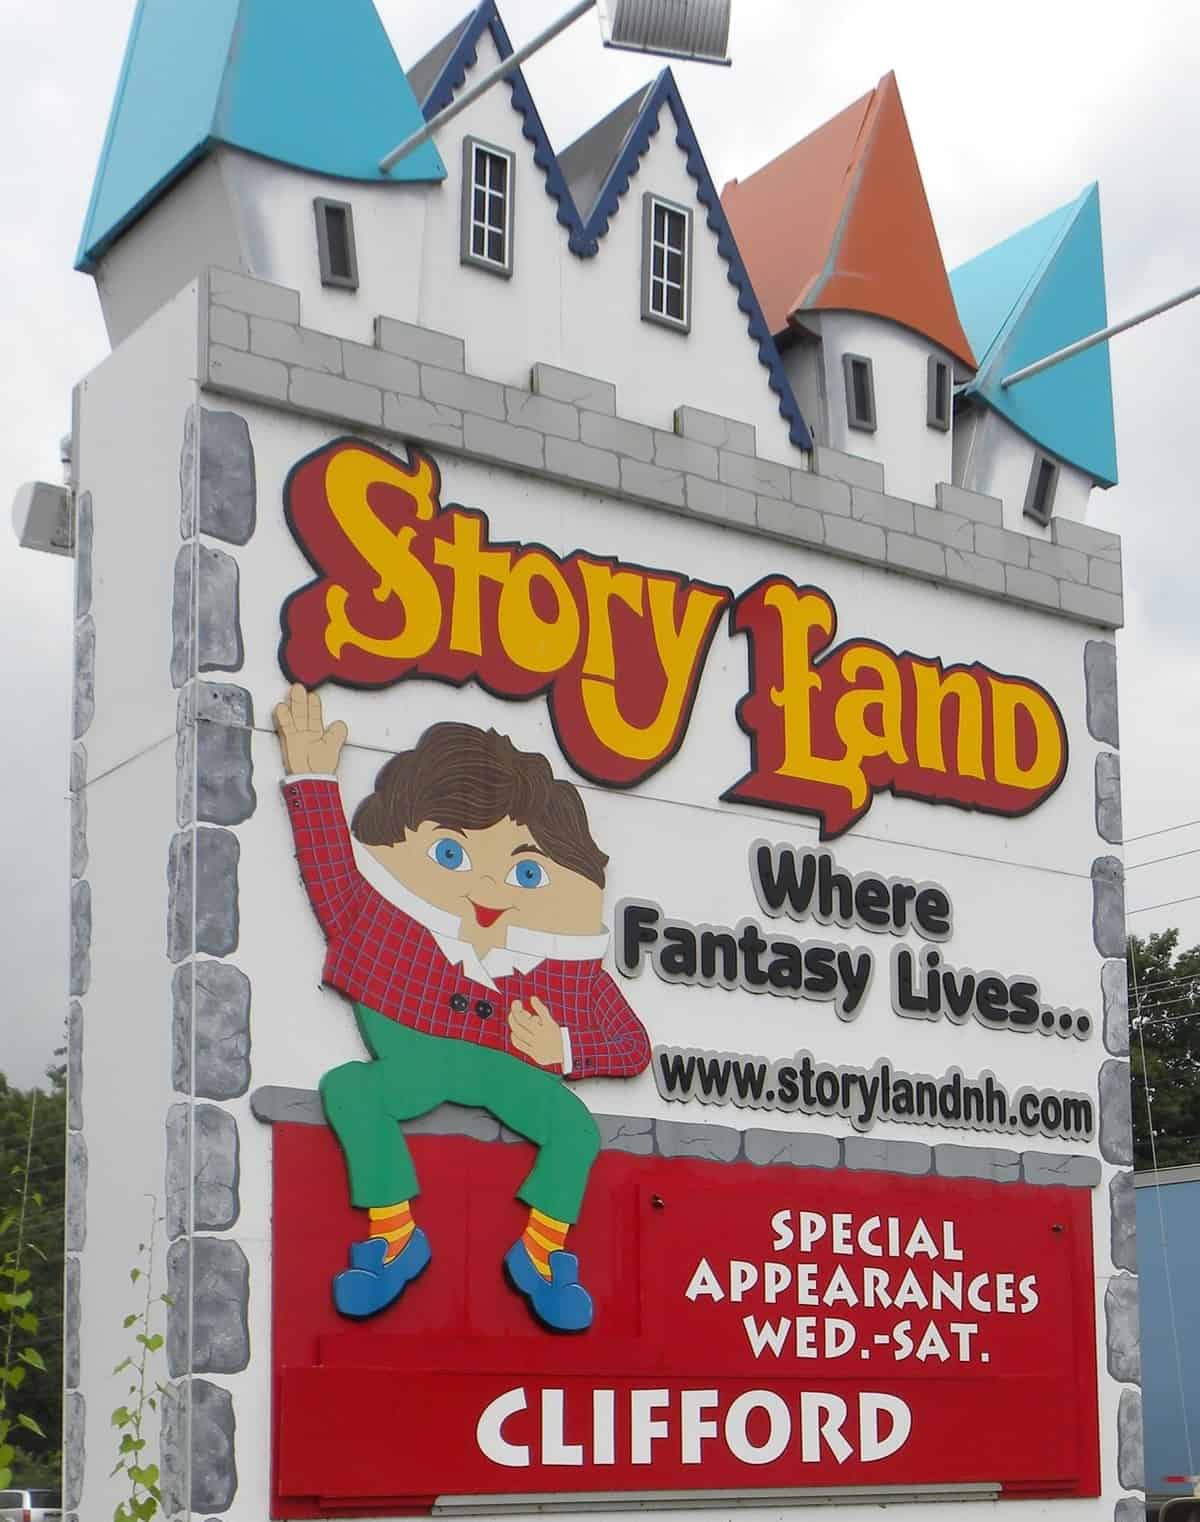 StoryLand in Glen, New Hampshire